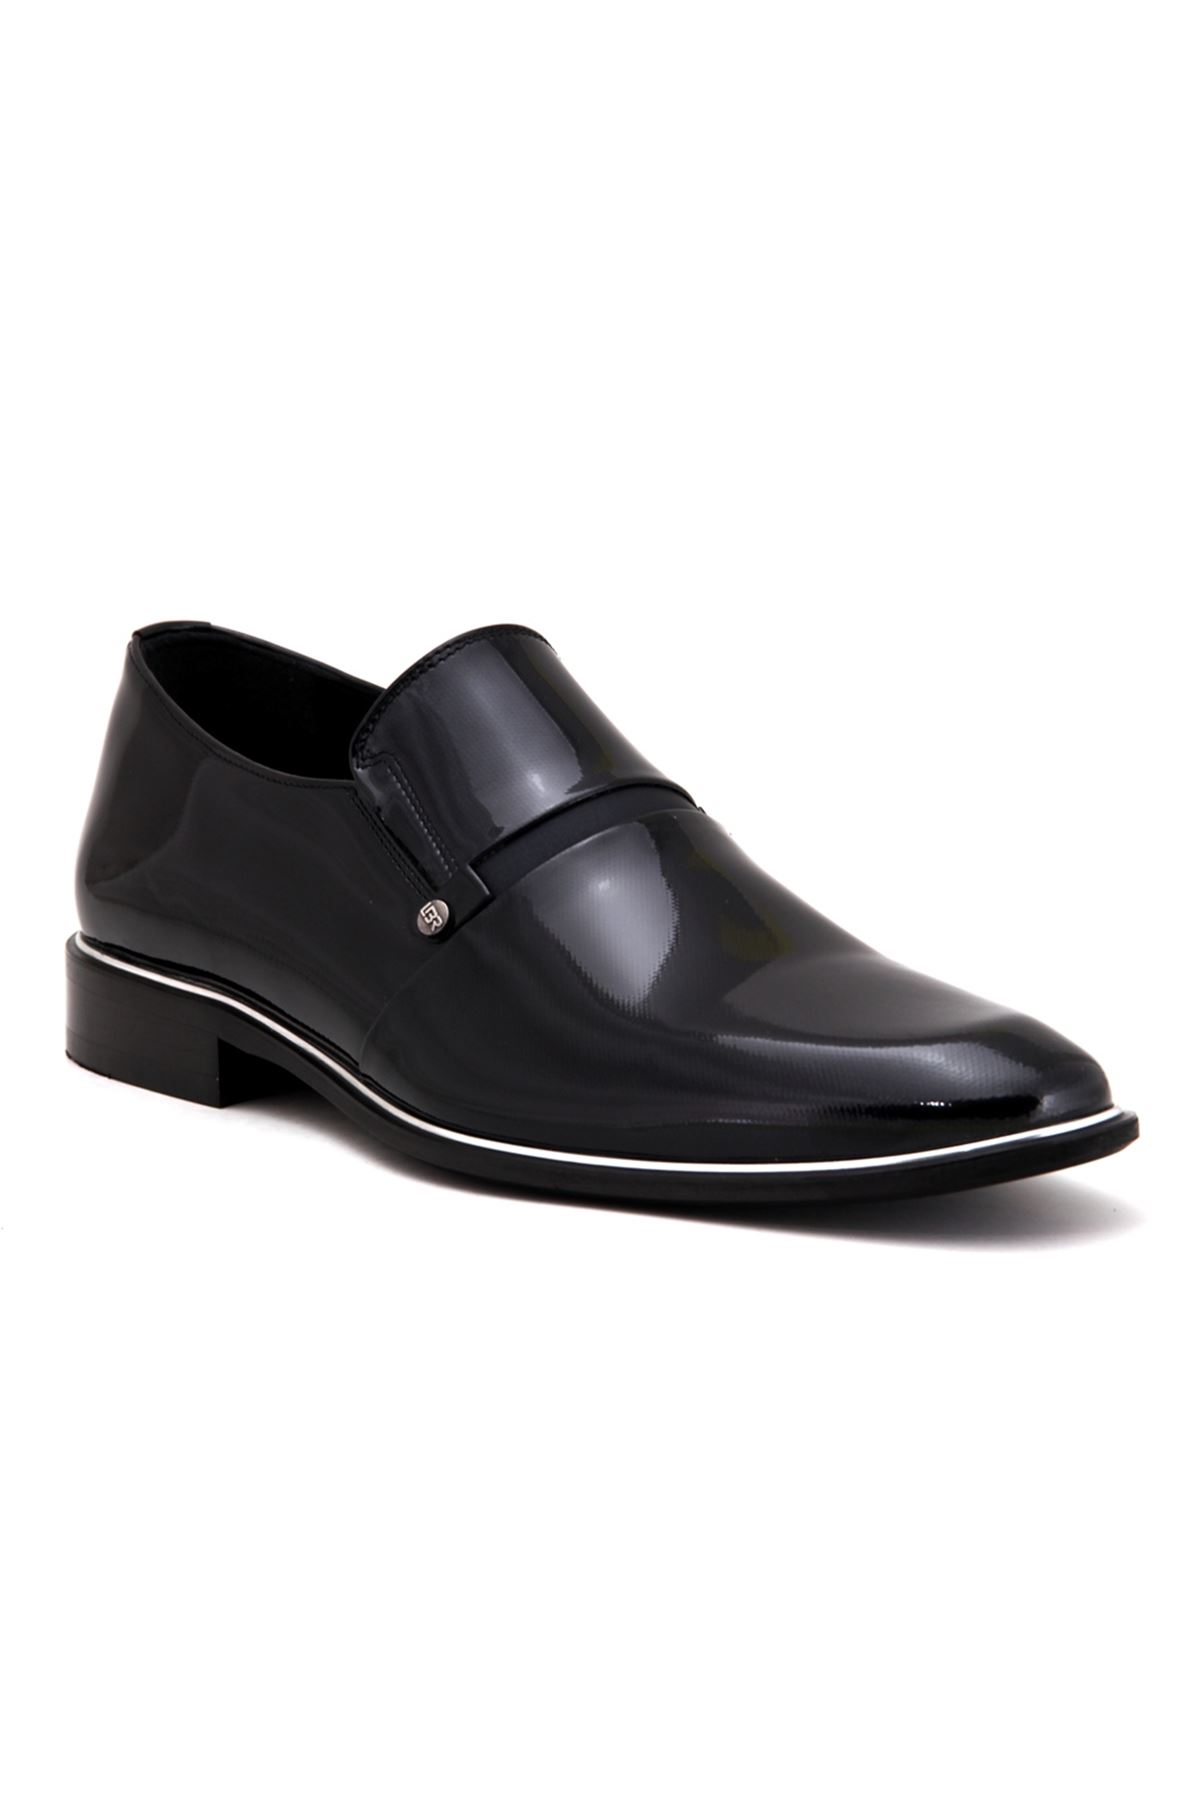 2712 Libero Klasik Erkek Ayakkabı - Siyah Rugan